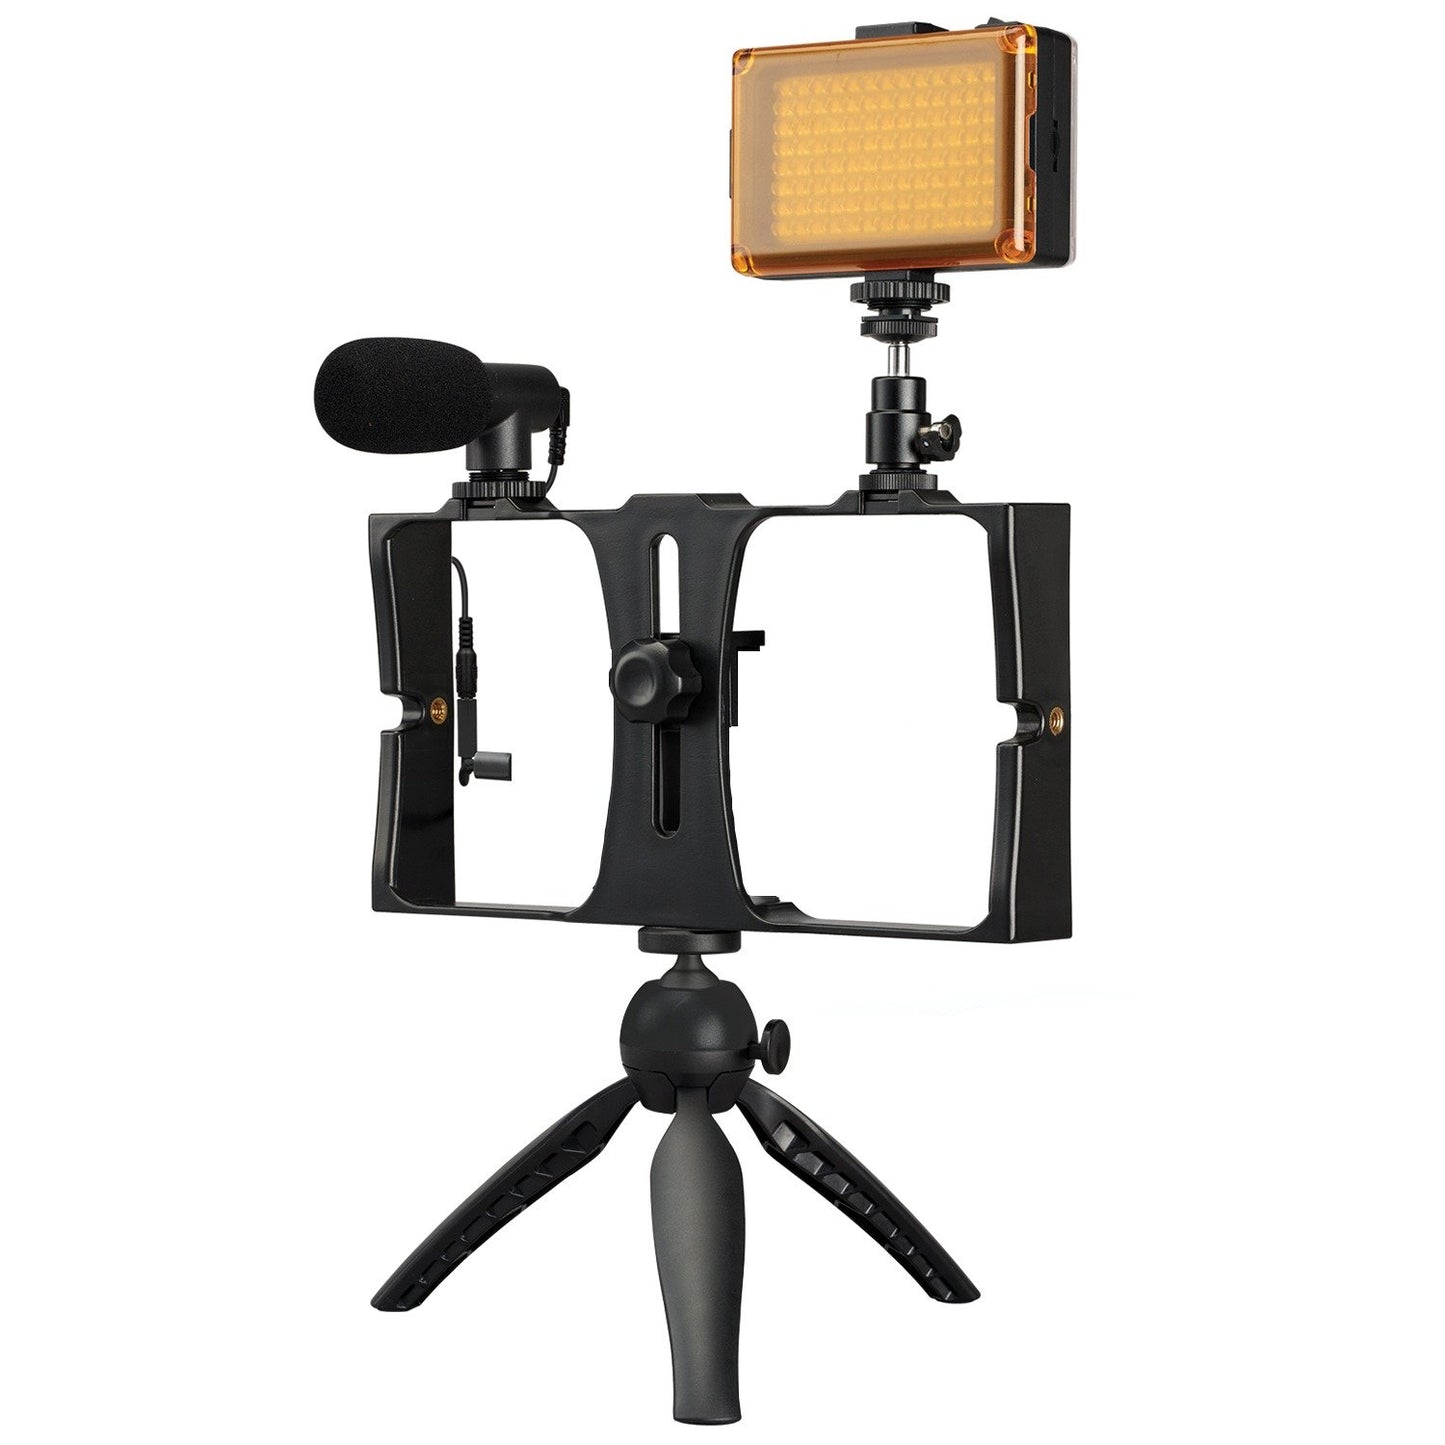 ILIVE TPDL900B All-In-One Vlogging Kit